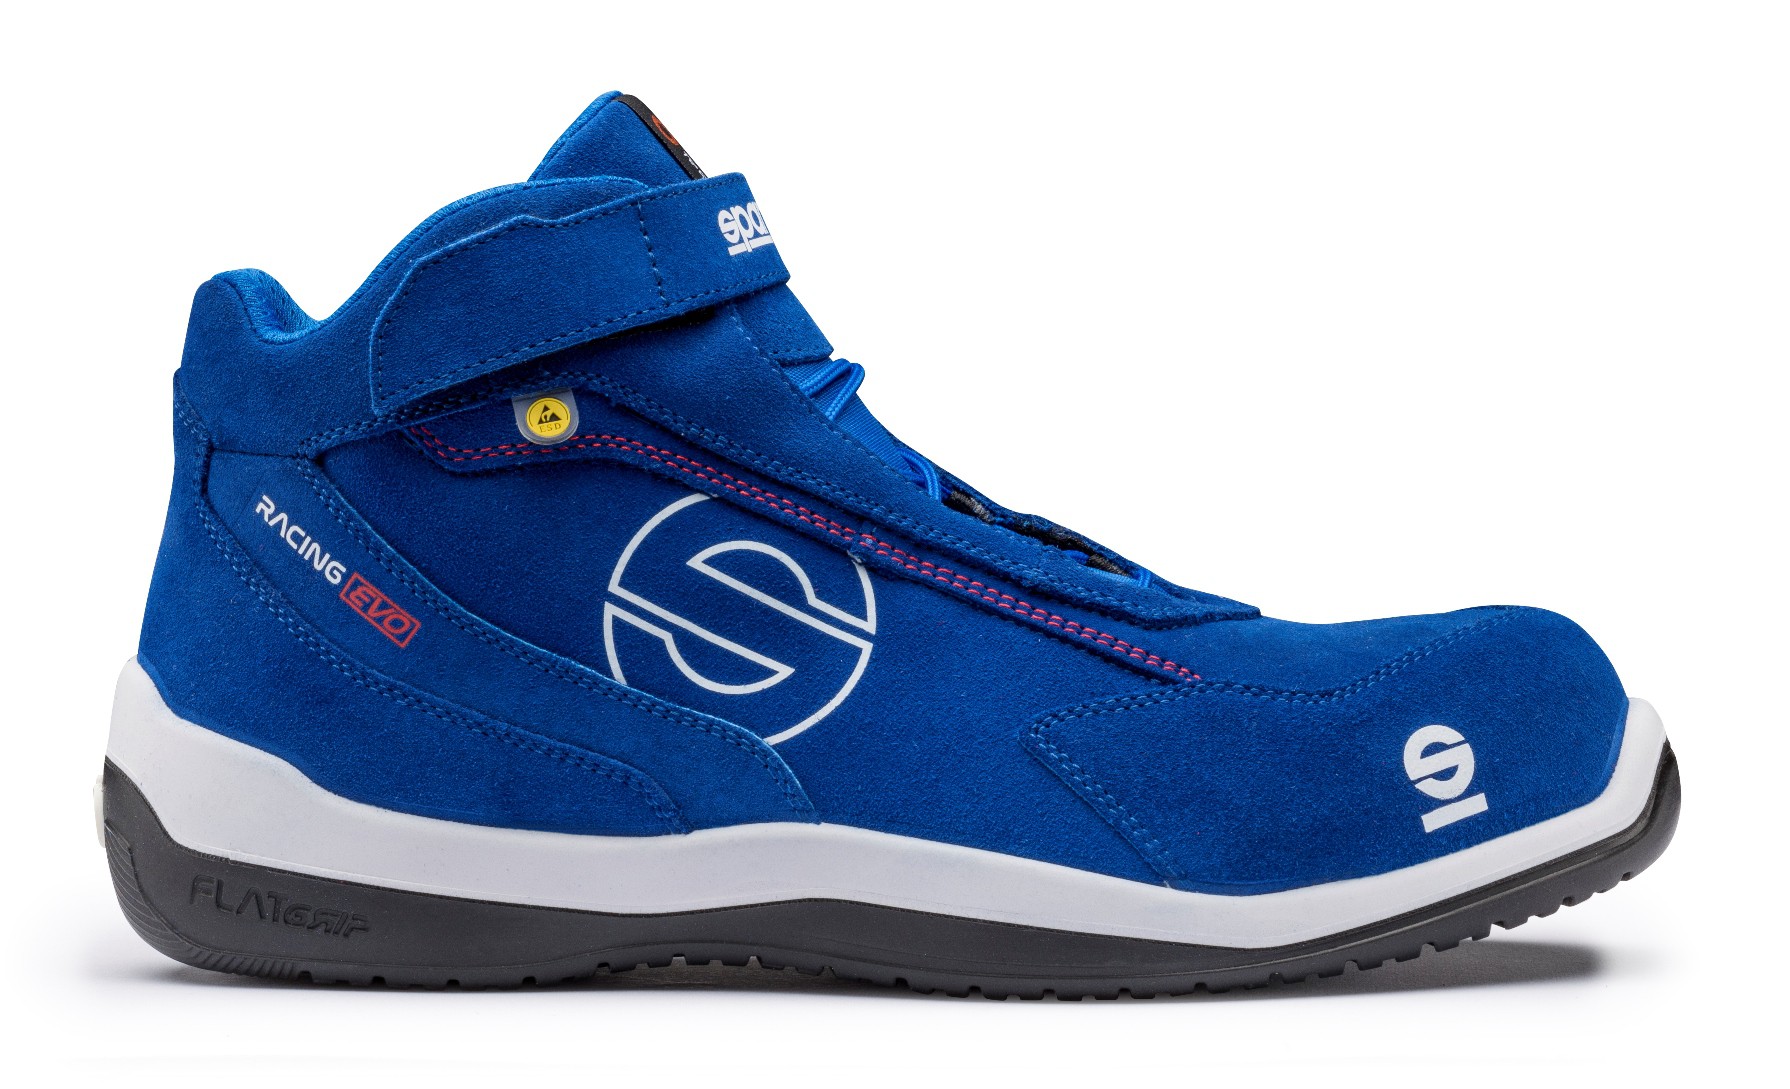 Basket securite semi montante Racing Evo bleu Sparco Chaussures-pro.fr